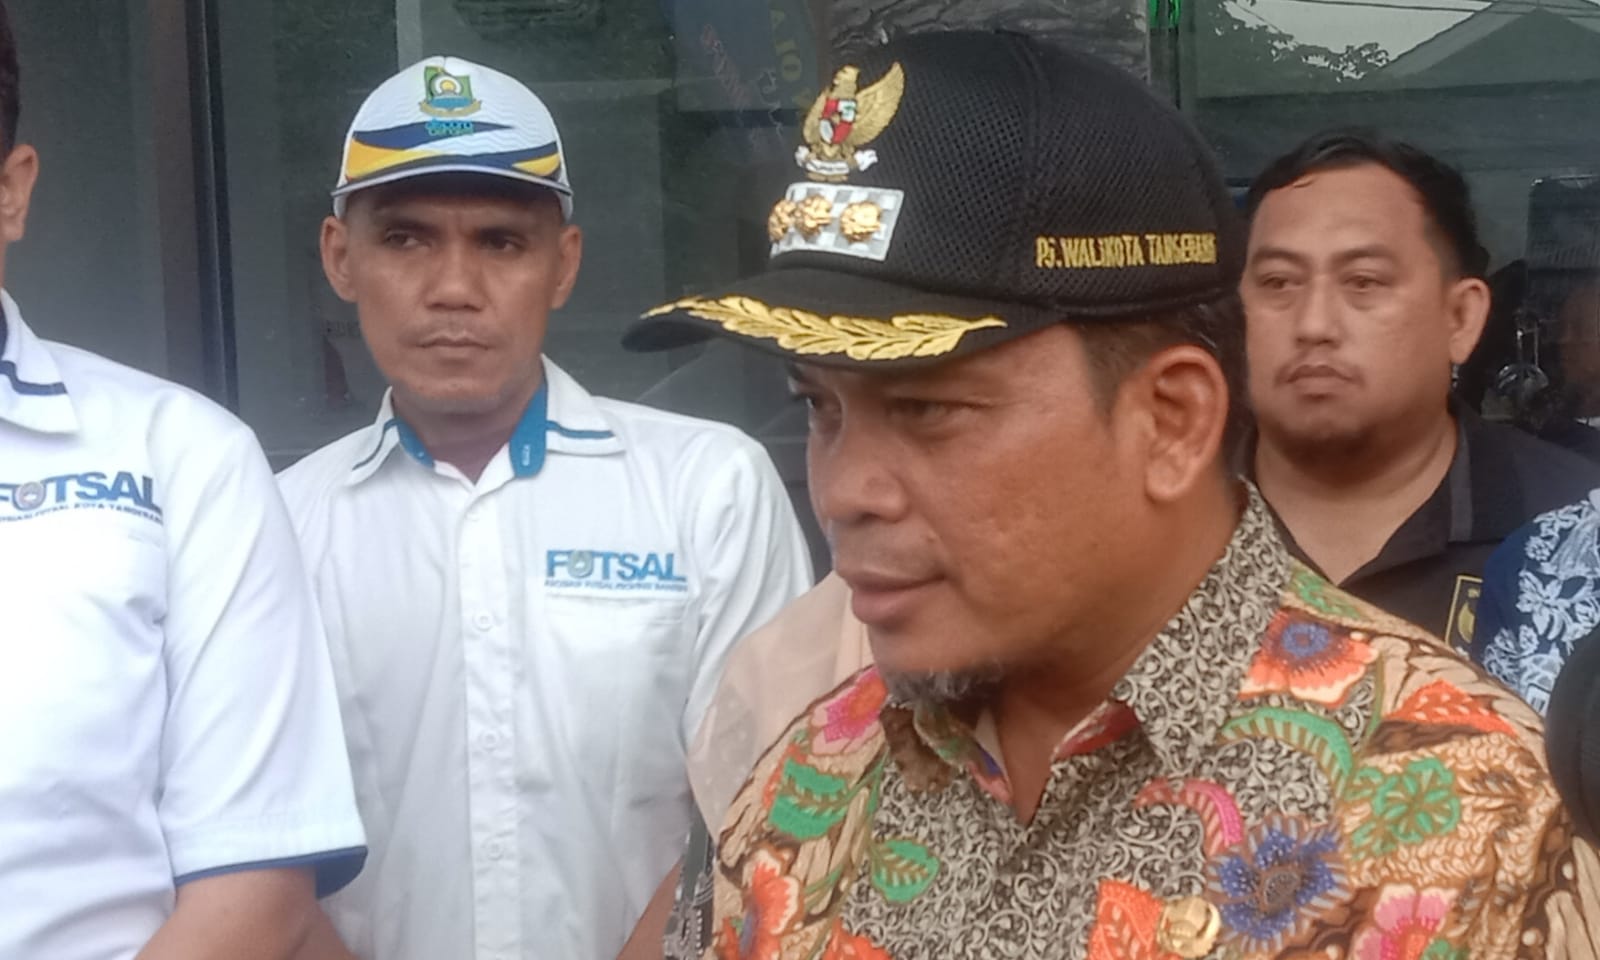 Pejabat  Pemkot Tangerang Ambil Formulir Penjaringan Pilkada Belum Masuk Tahapan